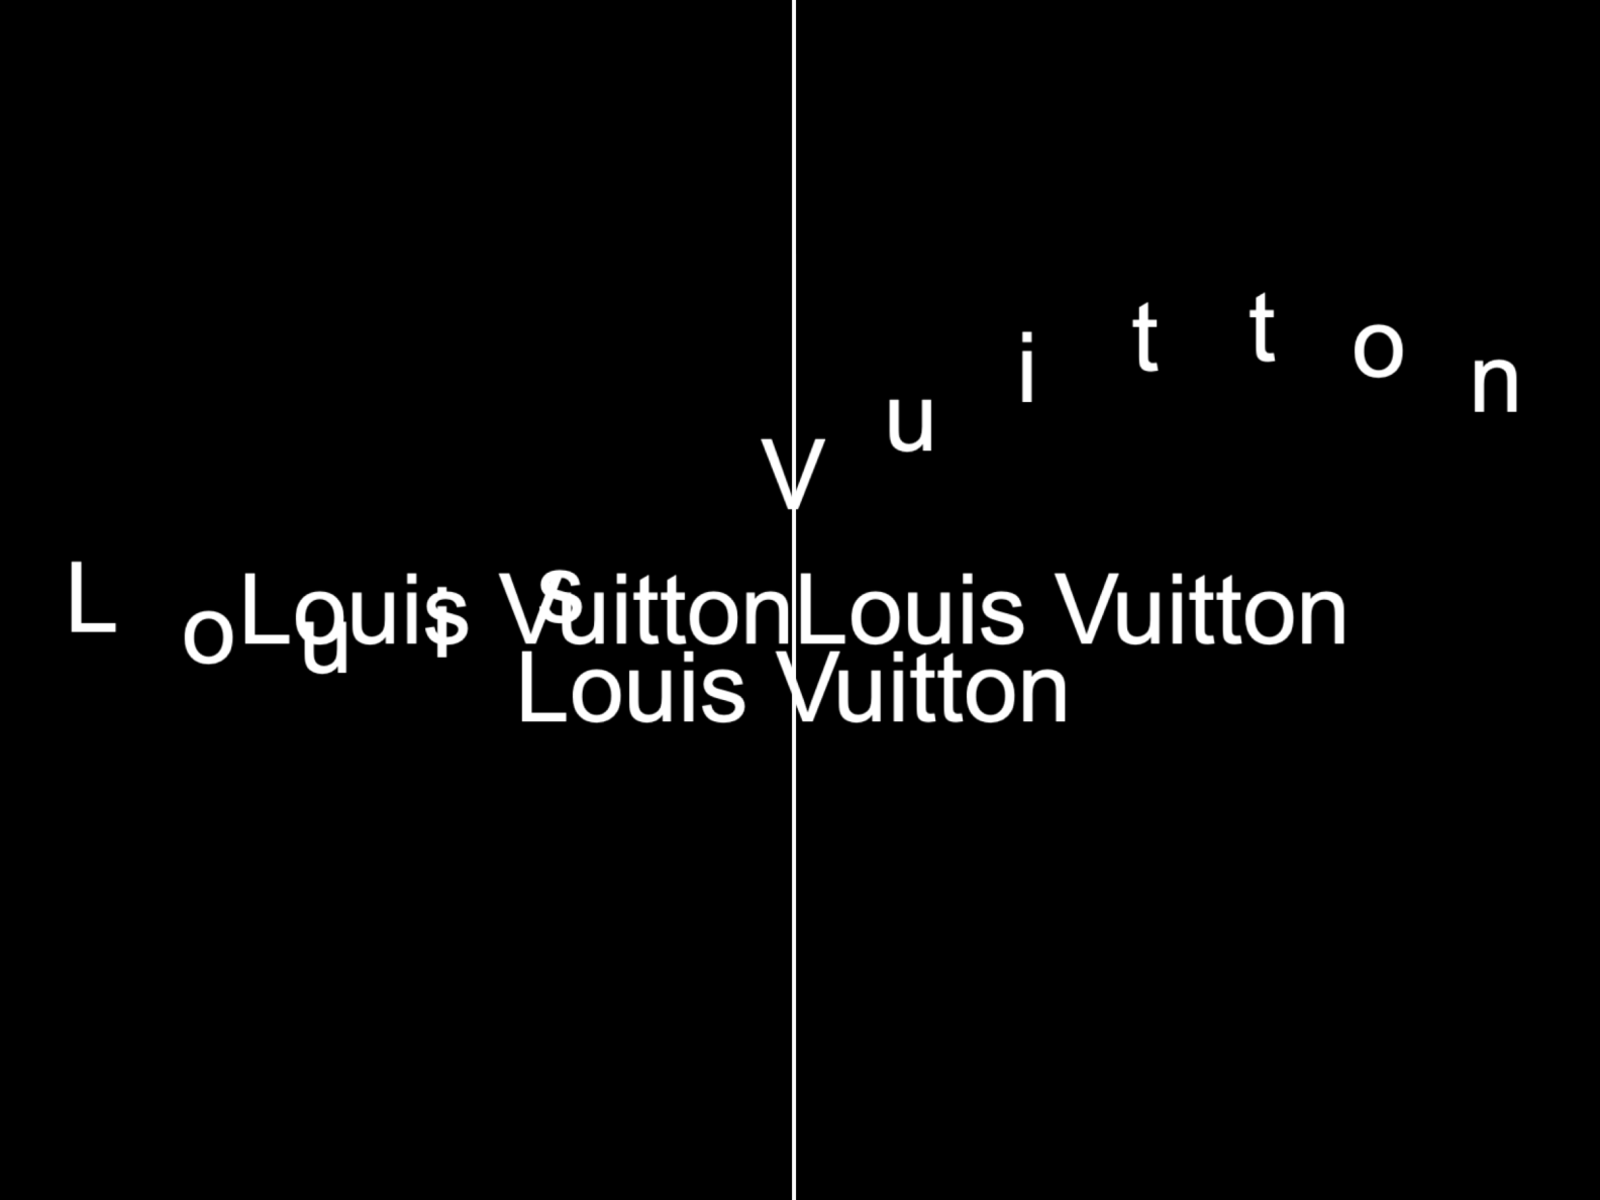 Louis Vuitton by Nastia Piven on Dribbble